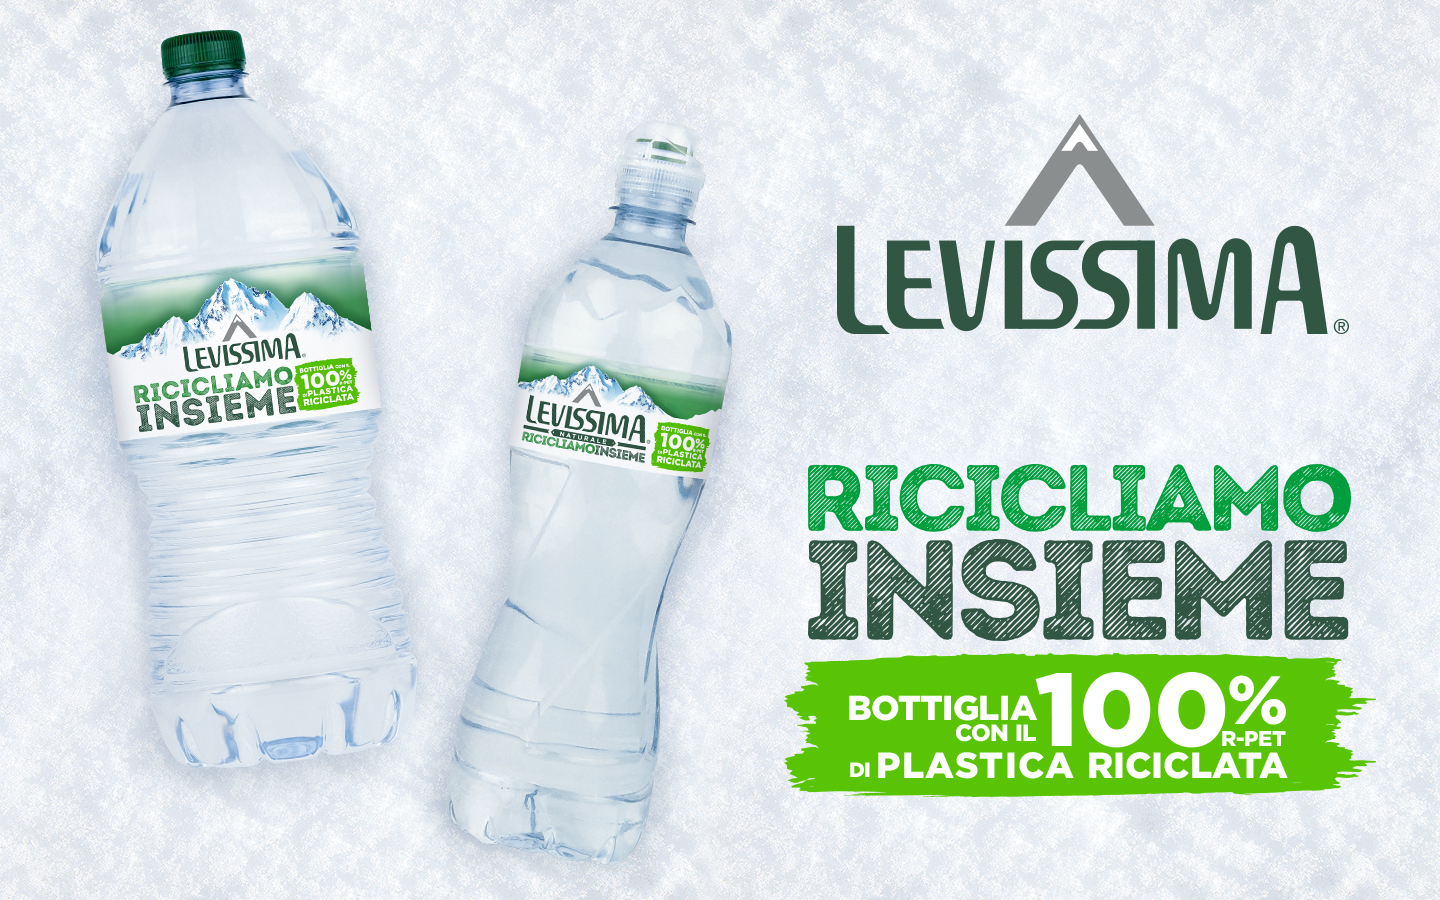 The concept Ricicliamo Insieme for Levissima bottles